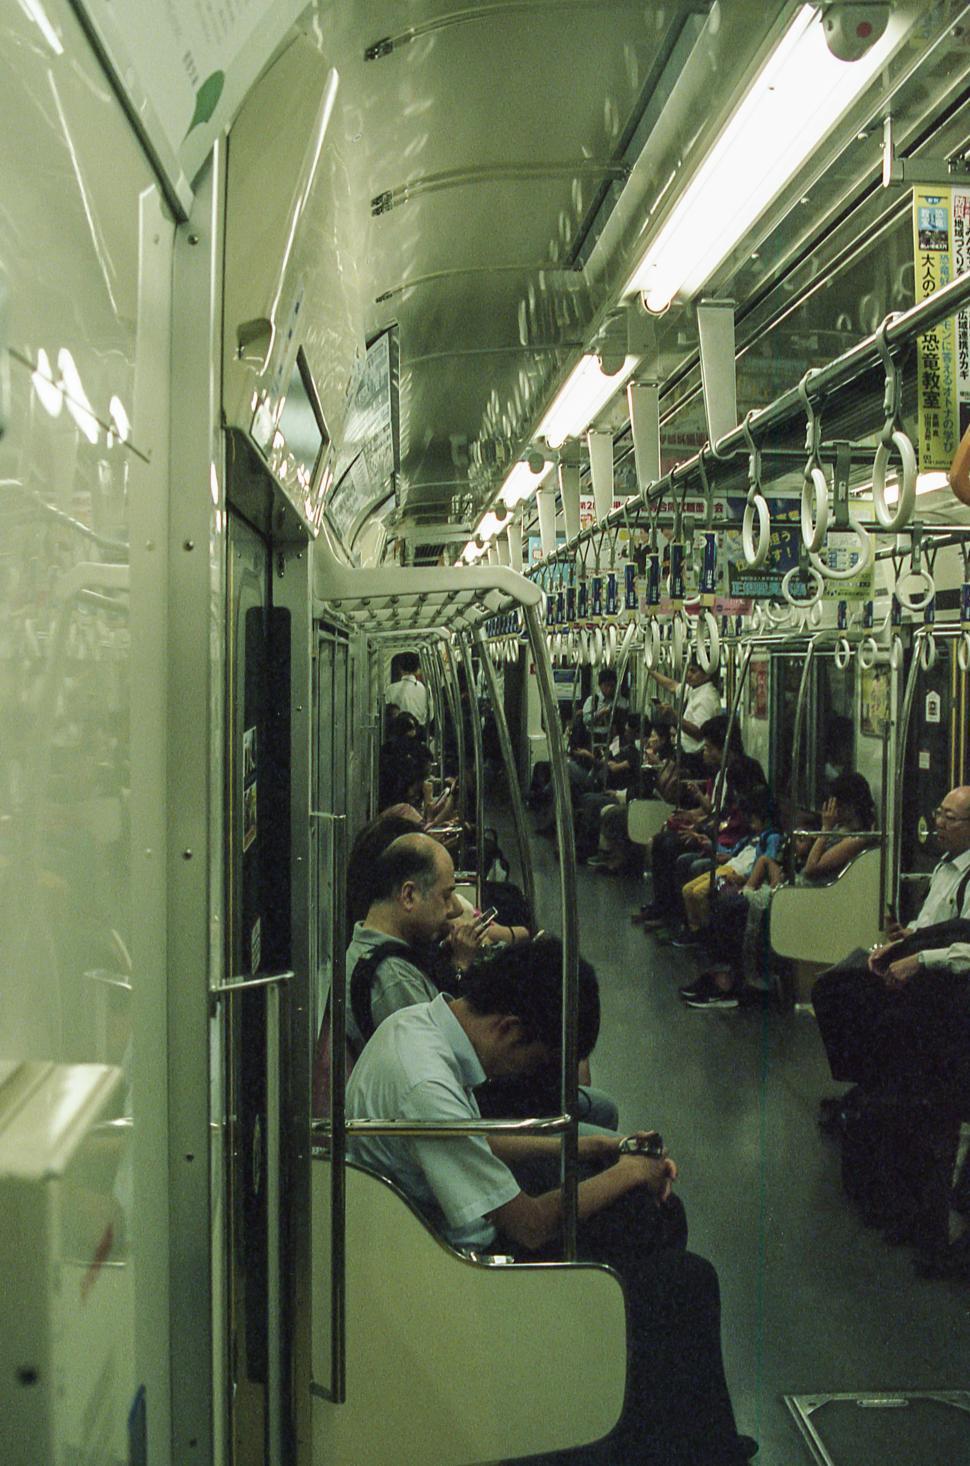 Free Image of People sitting on subway train 